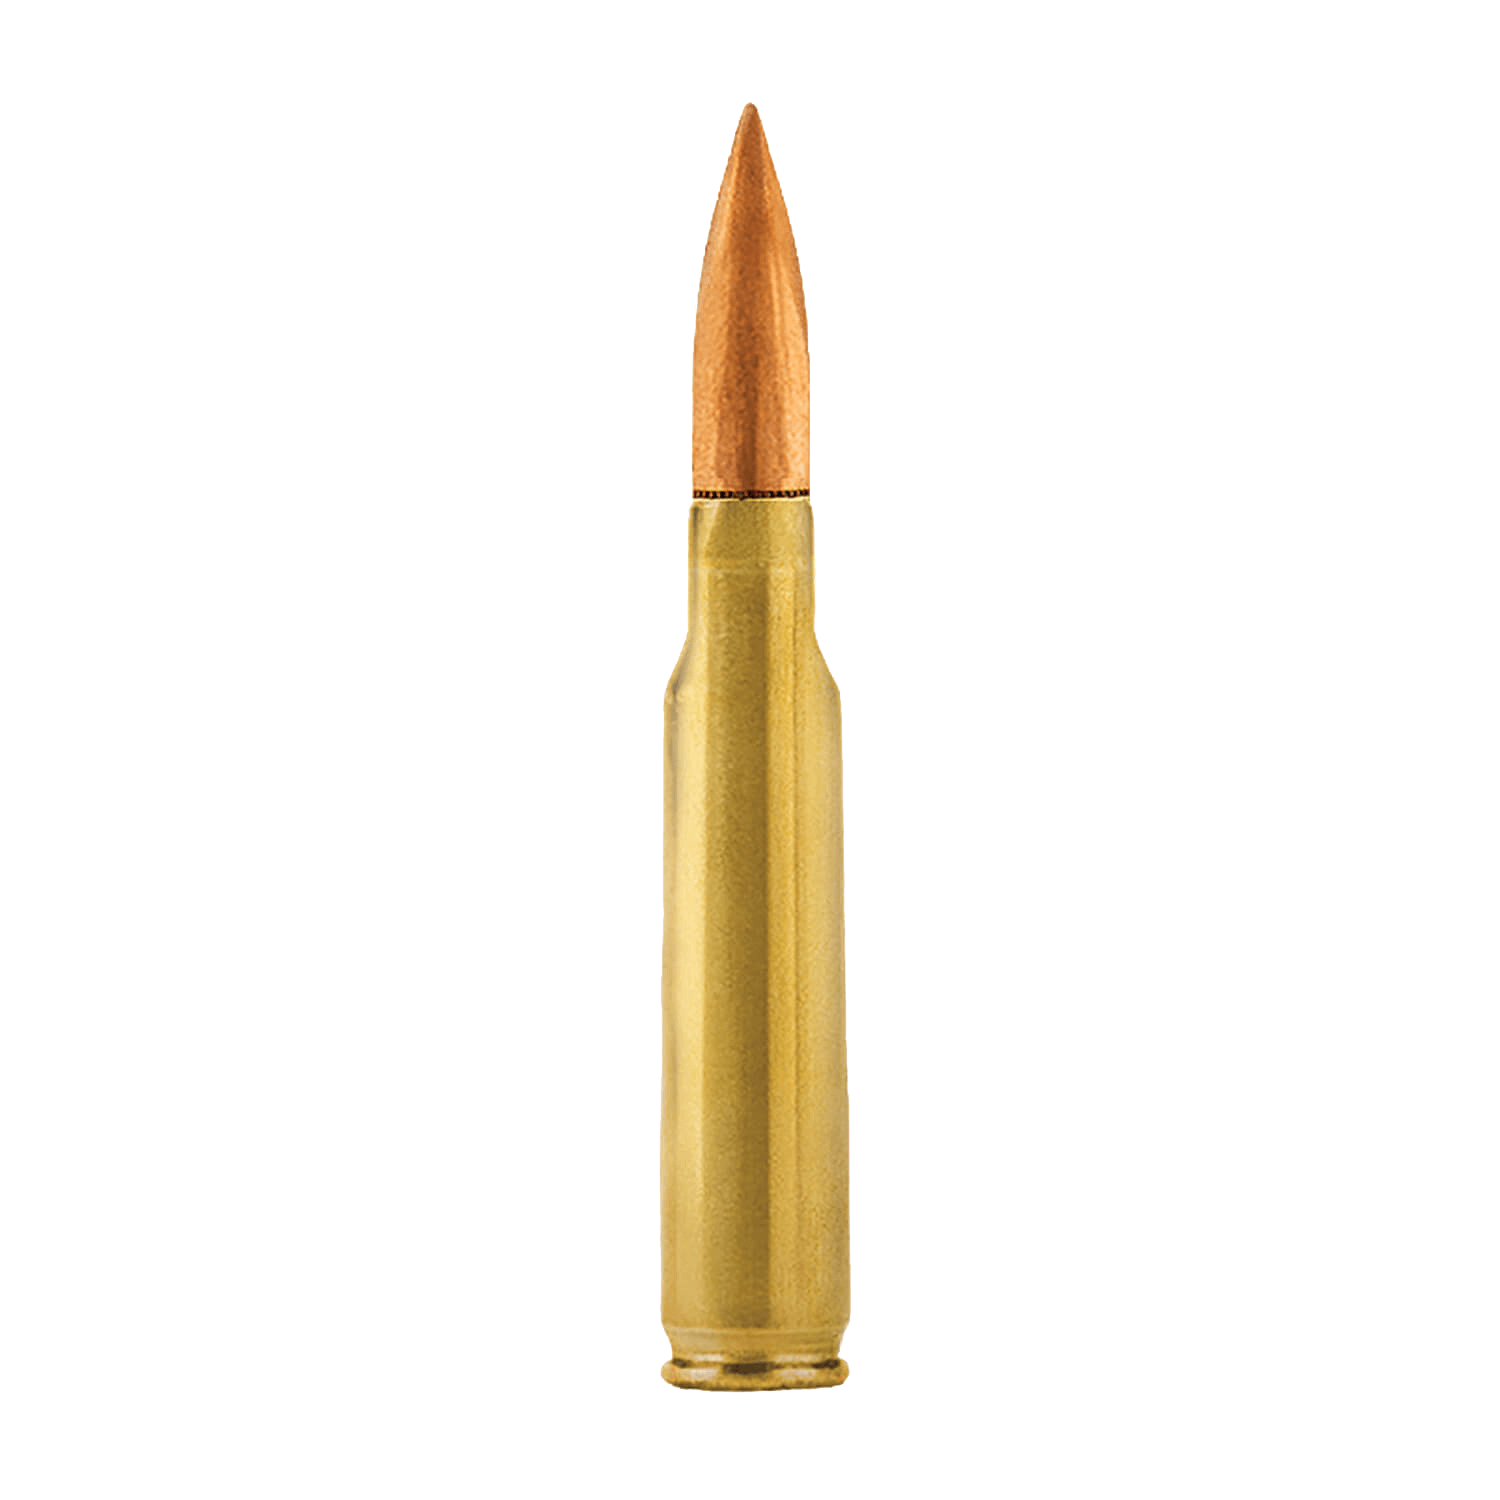 6.5 CREEDMOOR  Aguila Ammunition